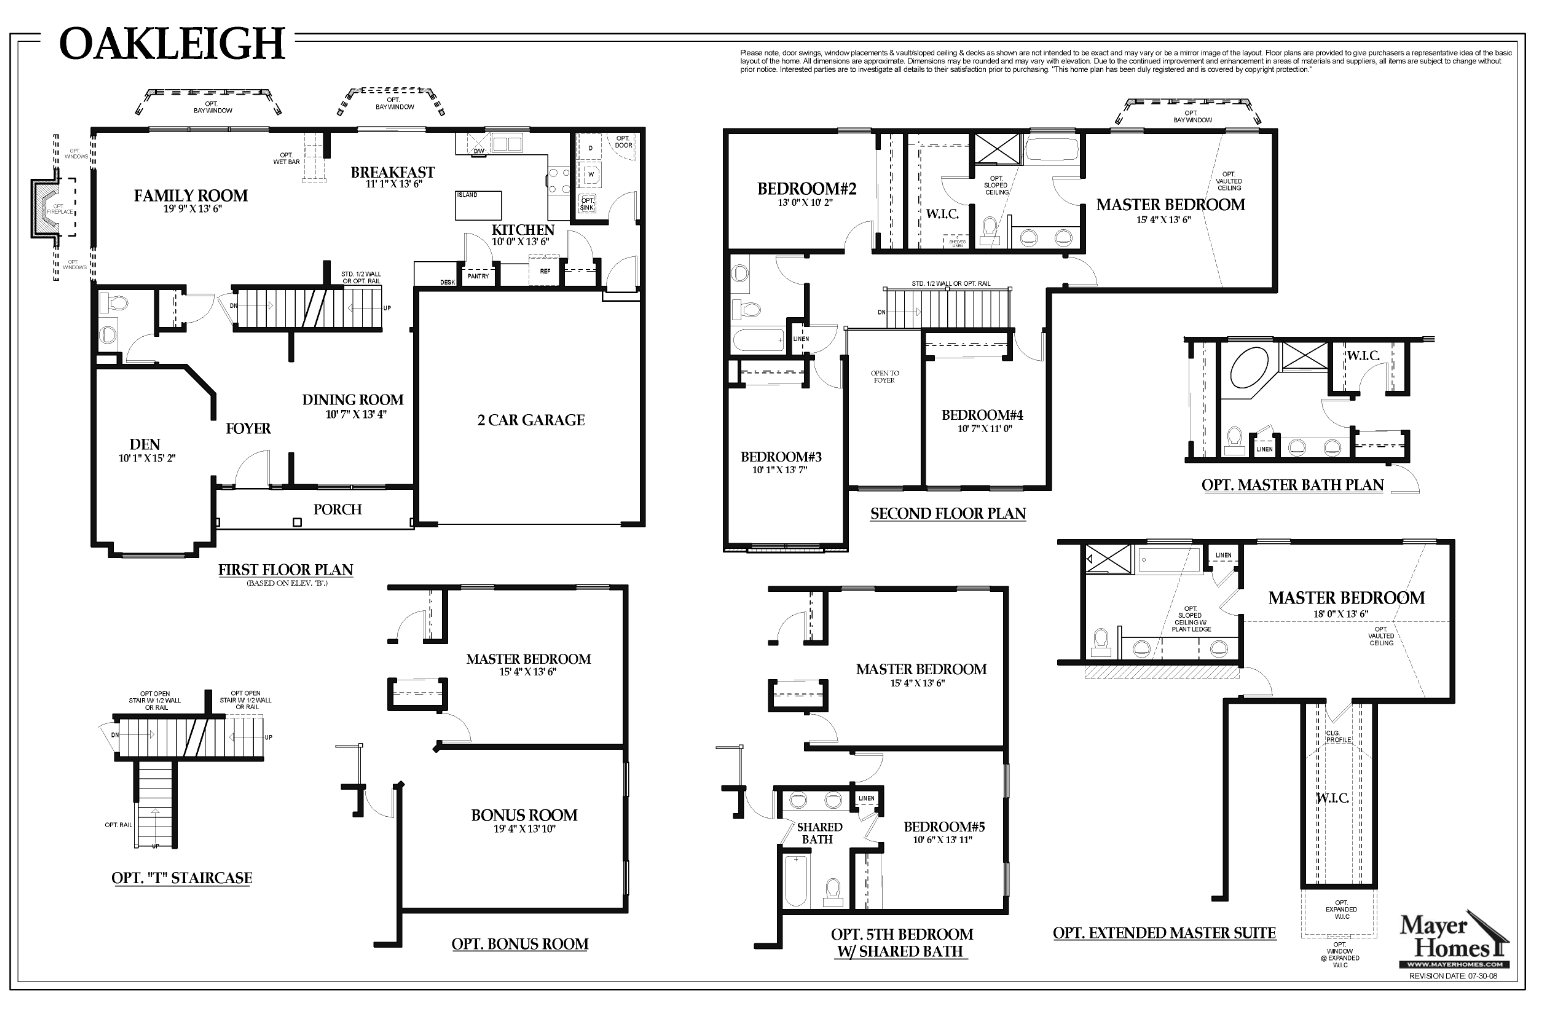 oakleigh-floor-plan-prestige-custom-homes